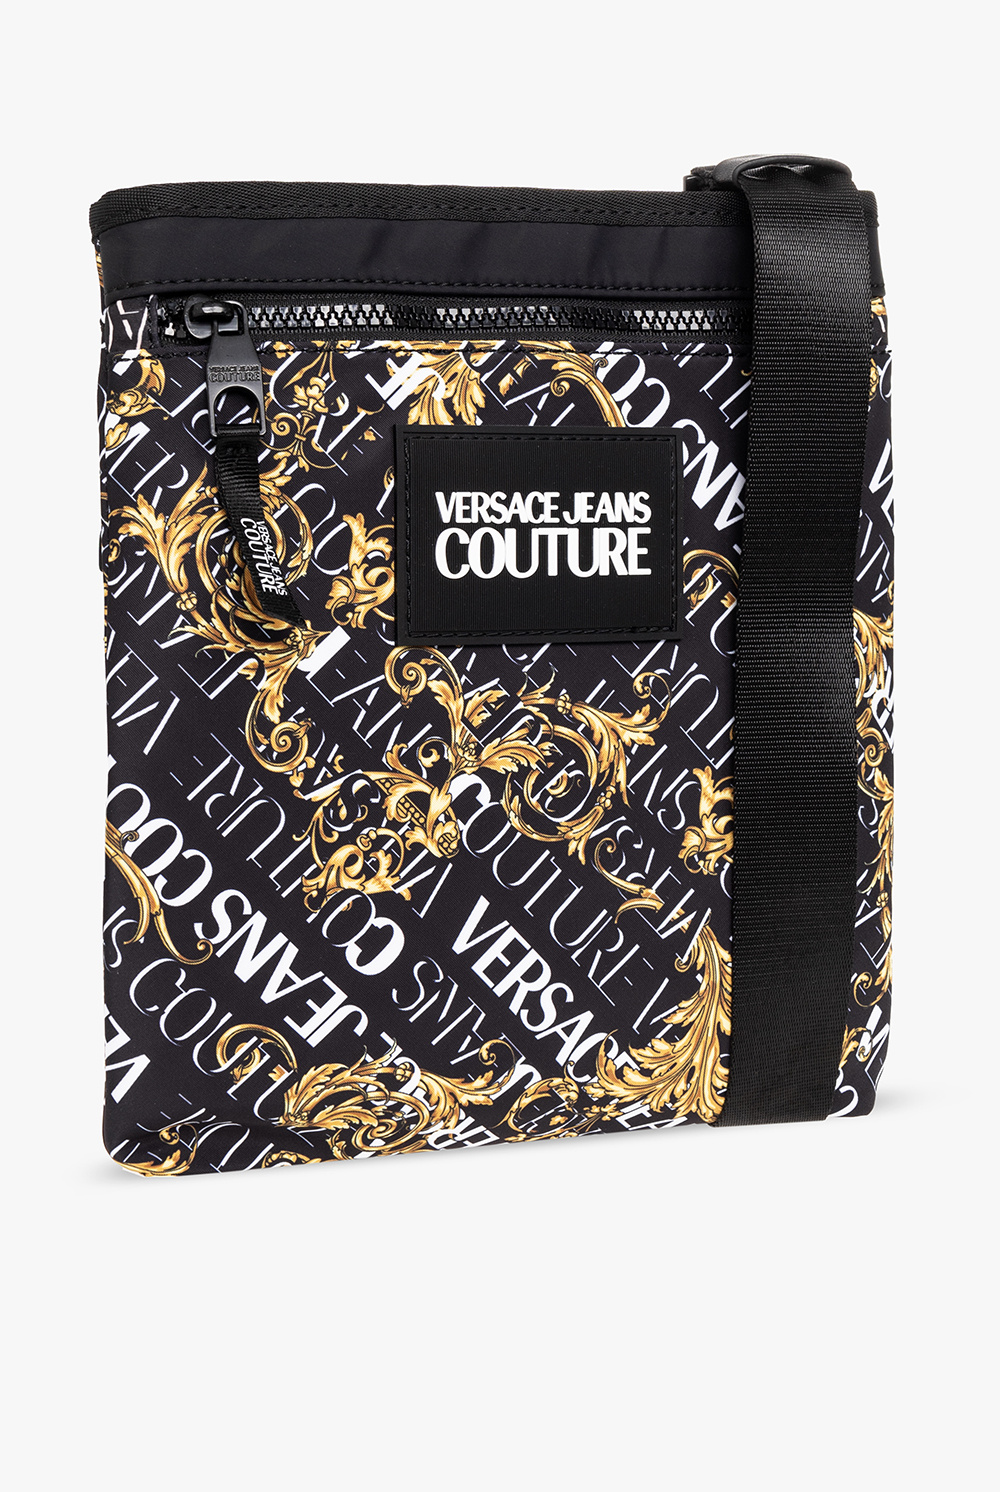 Versace for jeans Couture Patterned shoulder bag